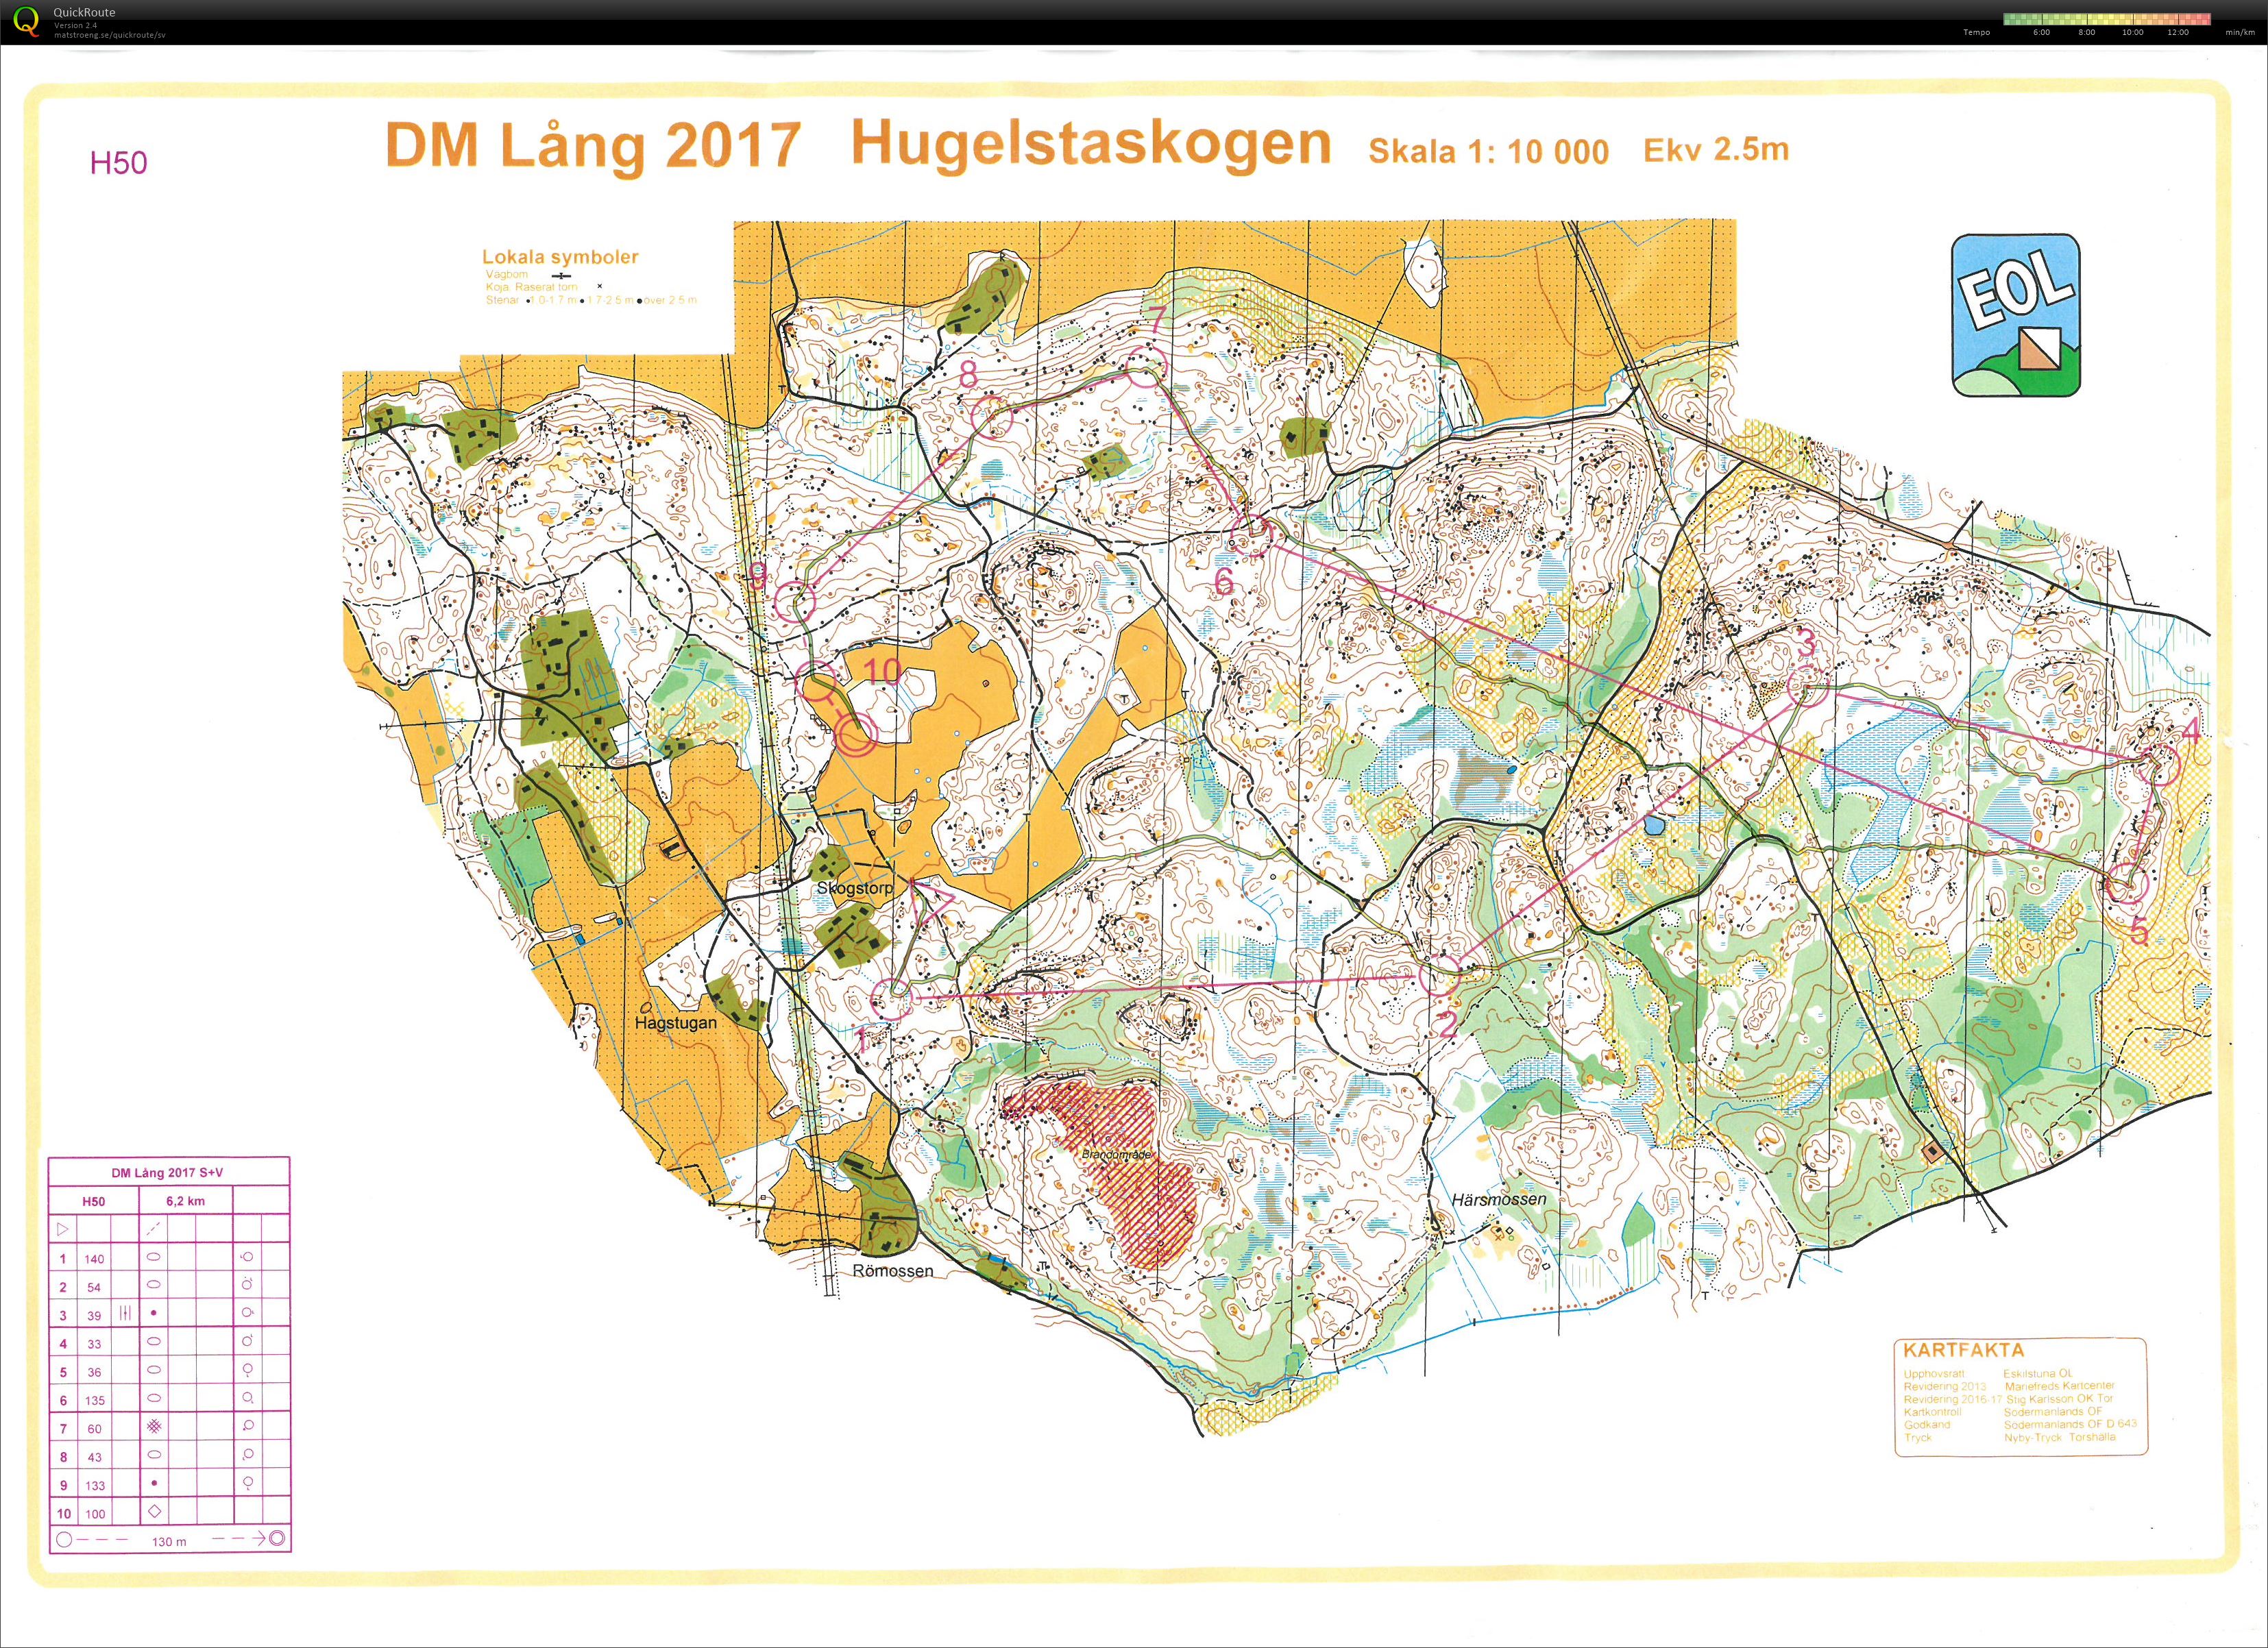 DM-Lång (03/09/2017)